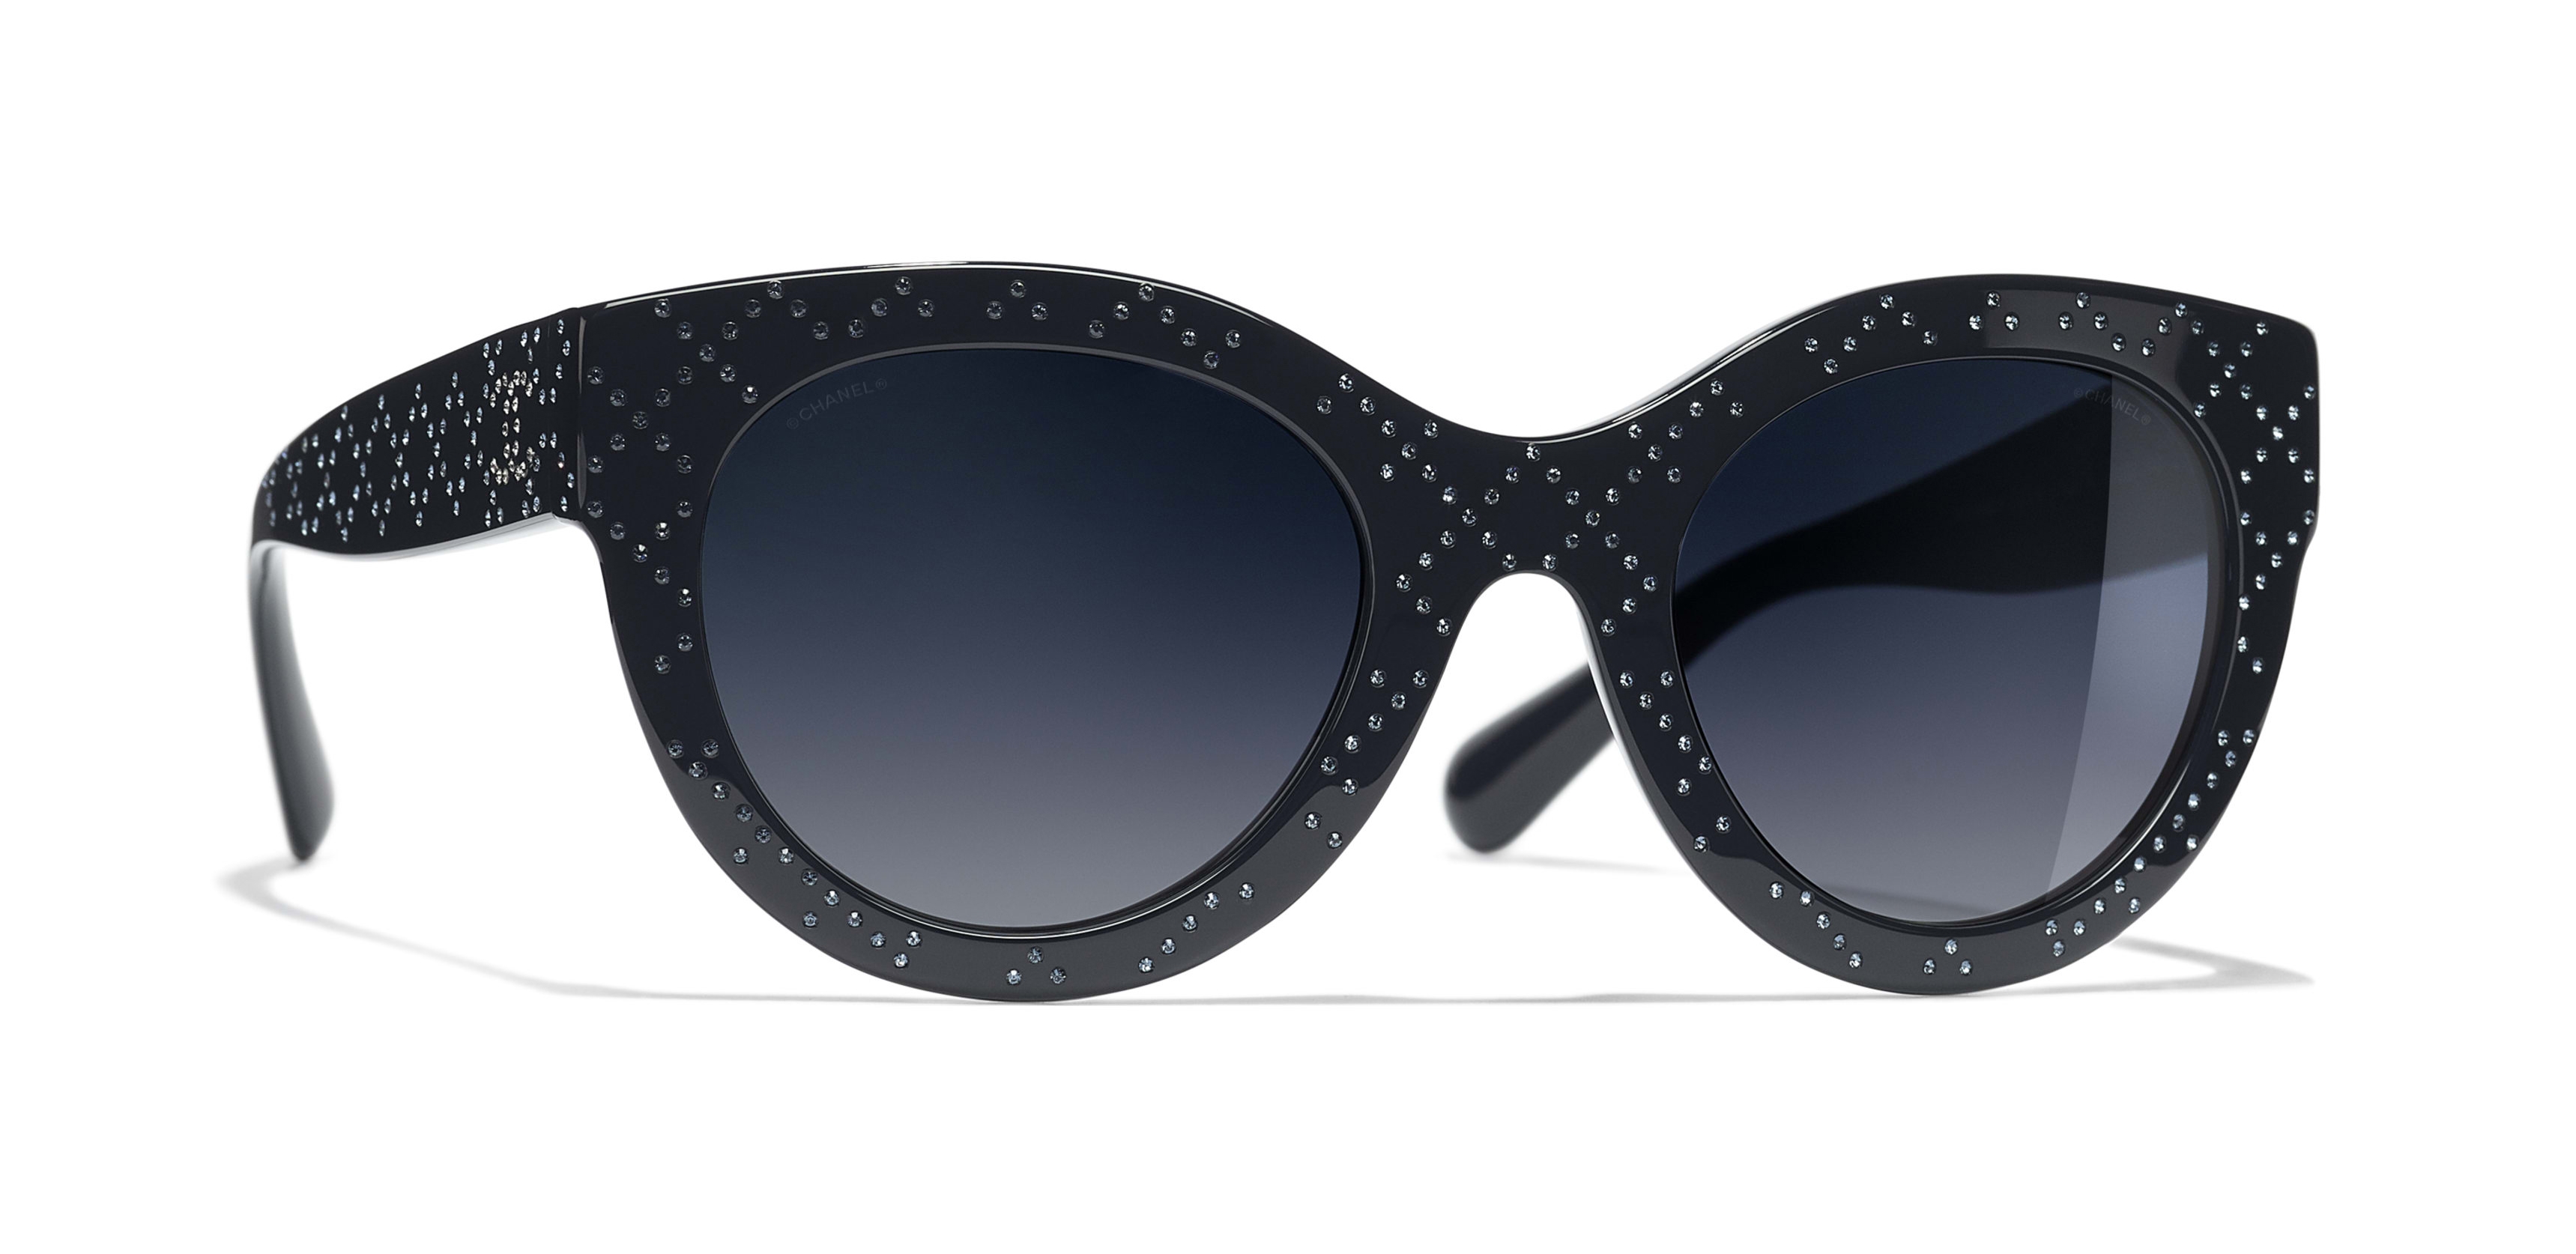 Eyewear: Square Blue Light Glasses, acetate — Fashion | CHANEL